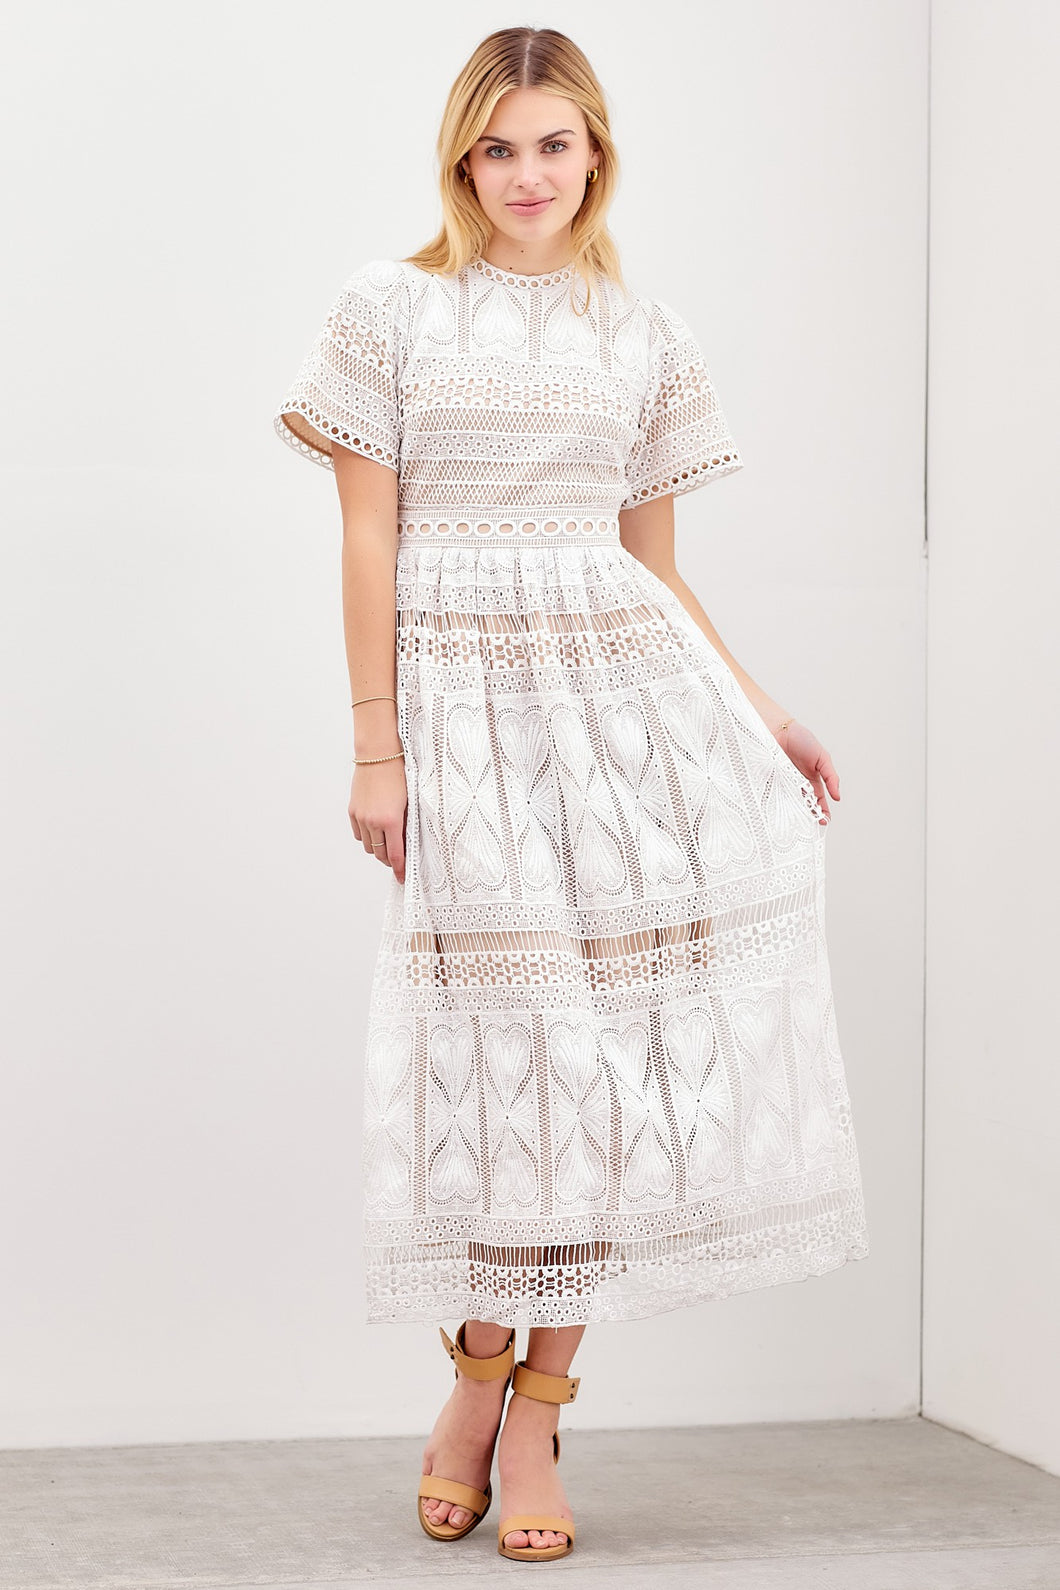 Ivory Lace Overlay Dress